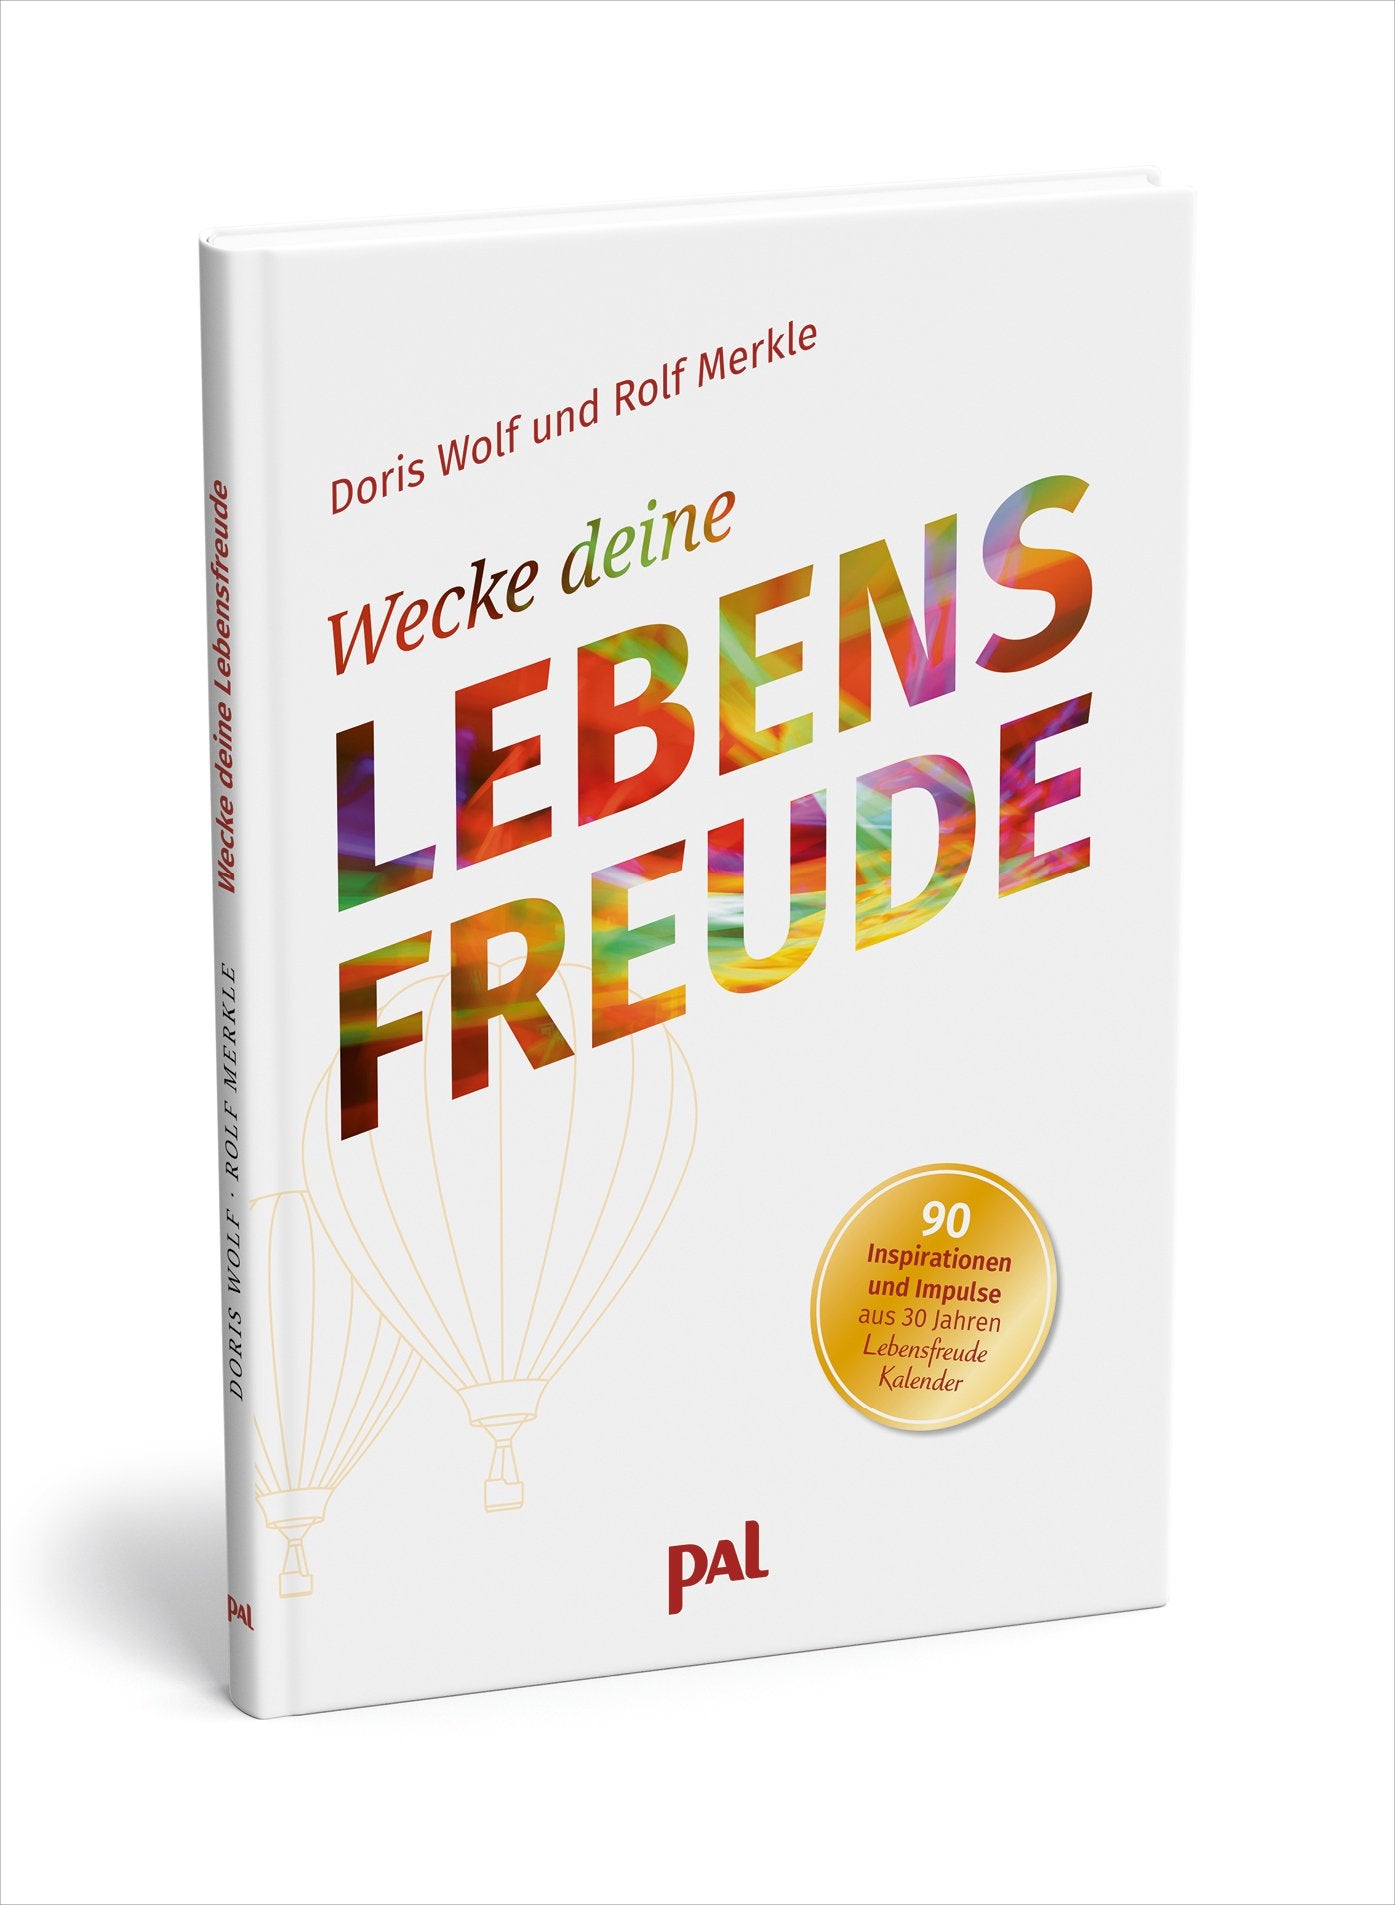 Ratgeber Psychologie Wecke deine Lebensfreude beliebteste Impulse Lebensfreude Kalender Doris Wolf Rolf Merkle PAL Verlag 